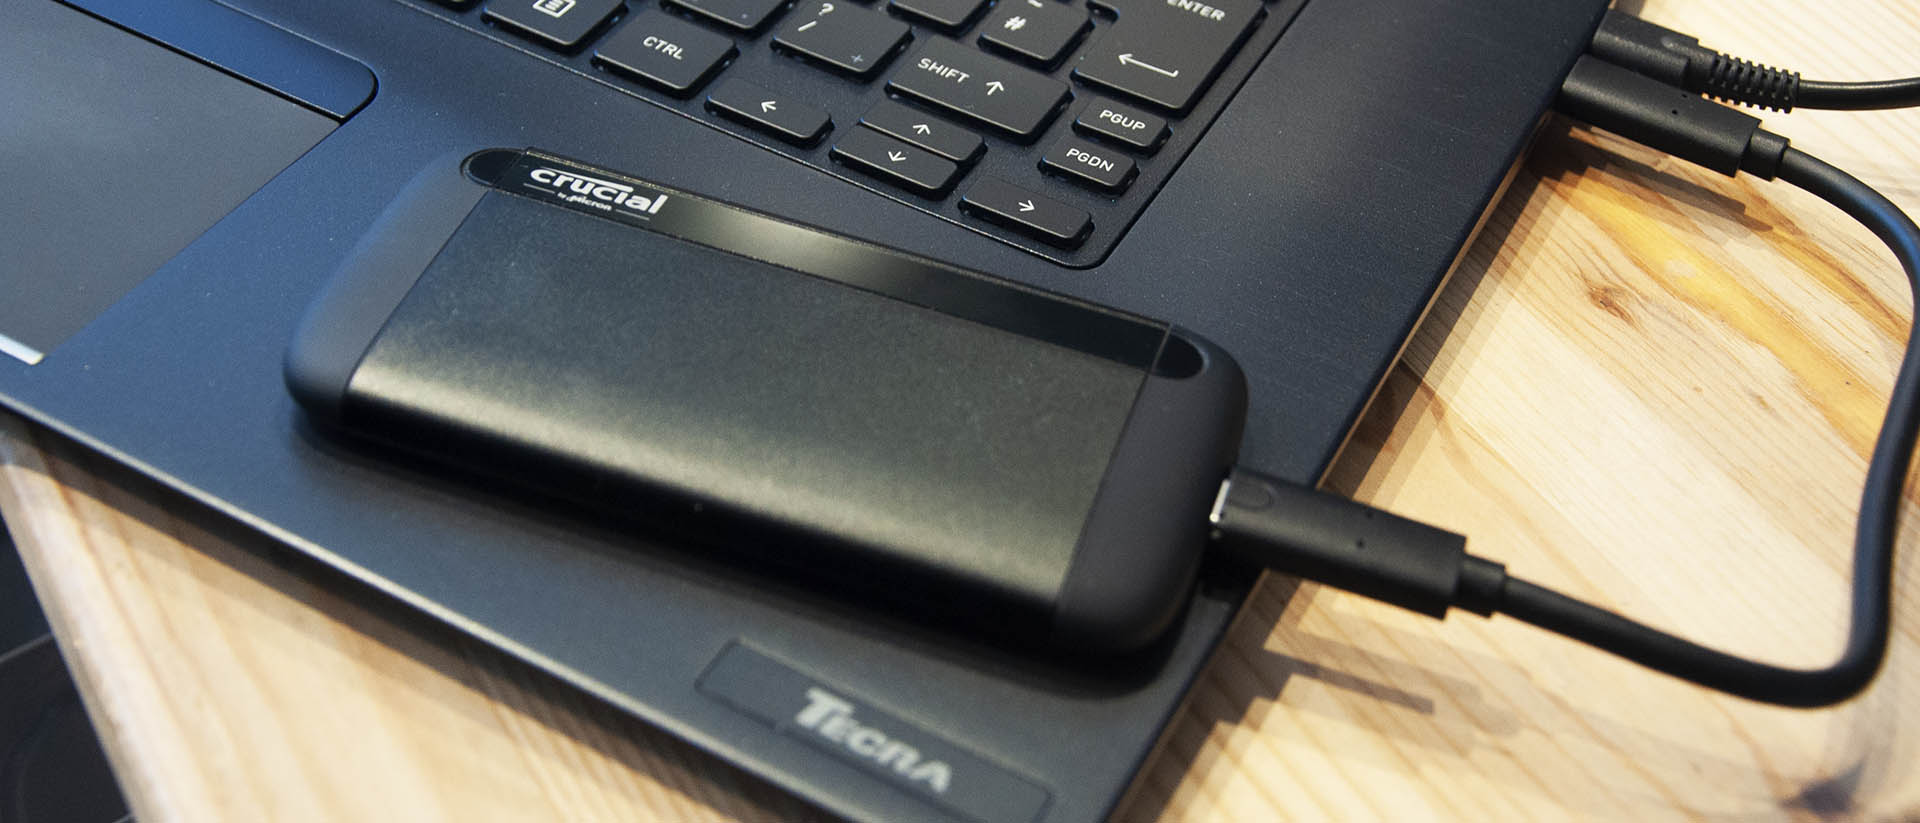 Crucial 1TB X8 Portable SSD – Up to 1050MB/s – USB 3.2 – USB-C USB